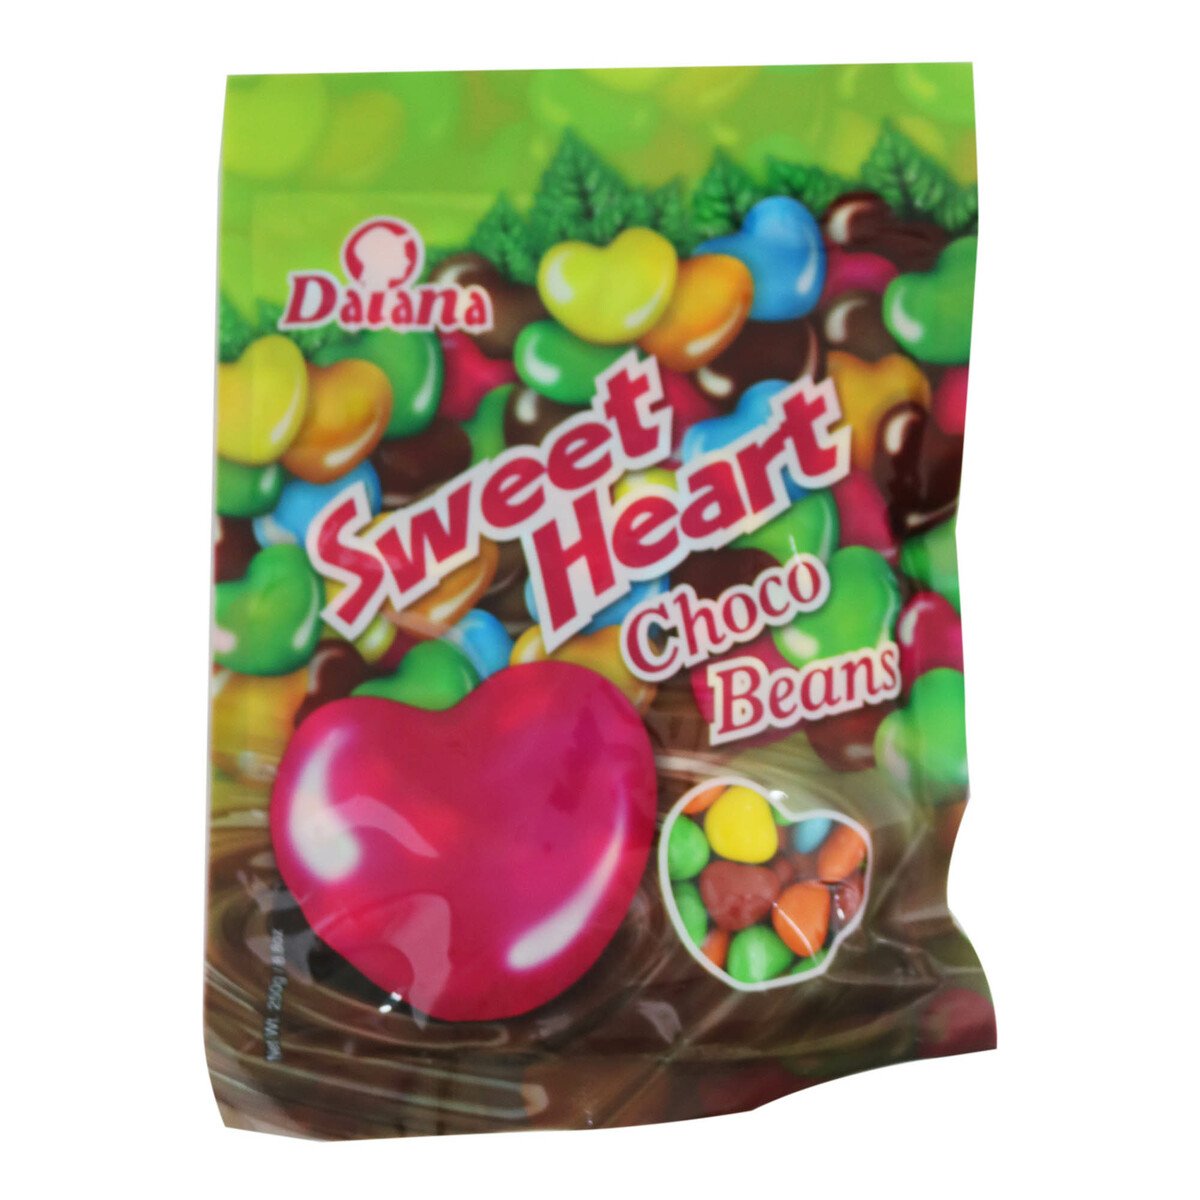 Daiana Sweet Heart Choco Beans 250g